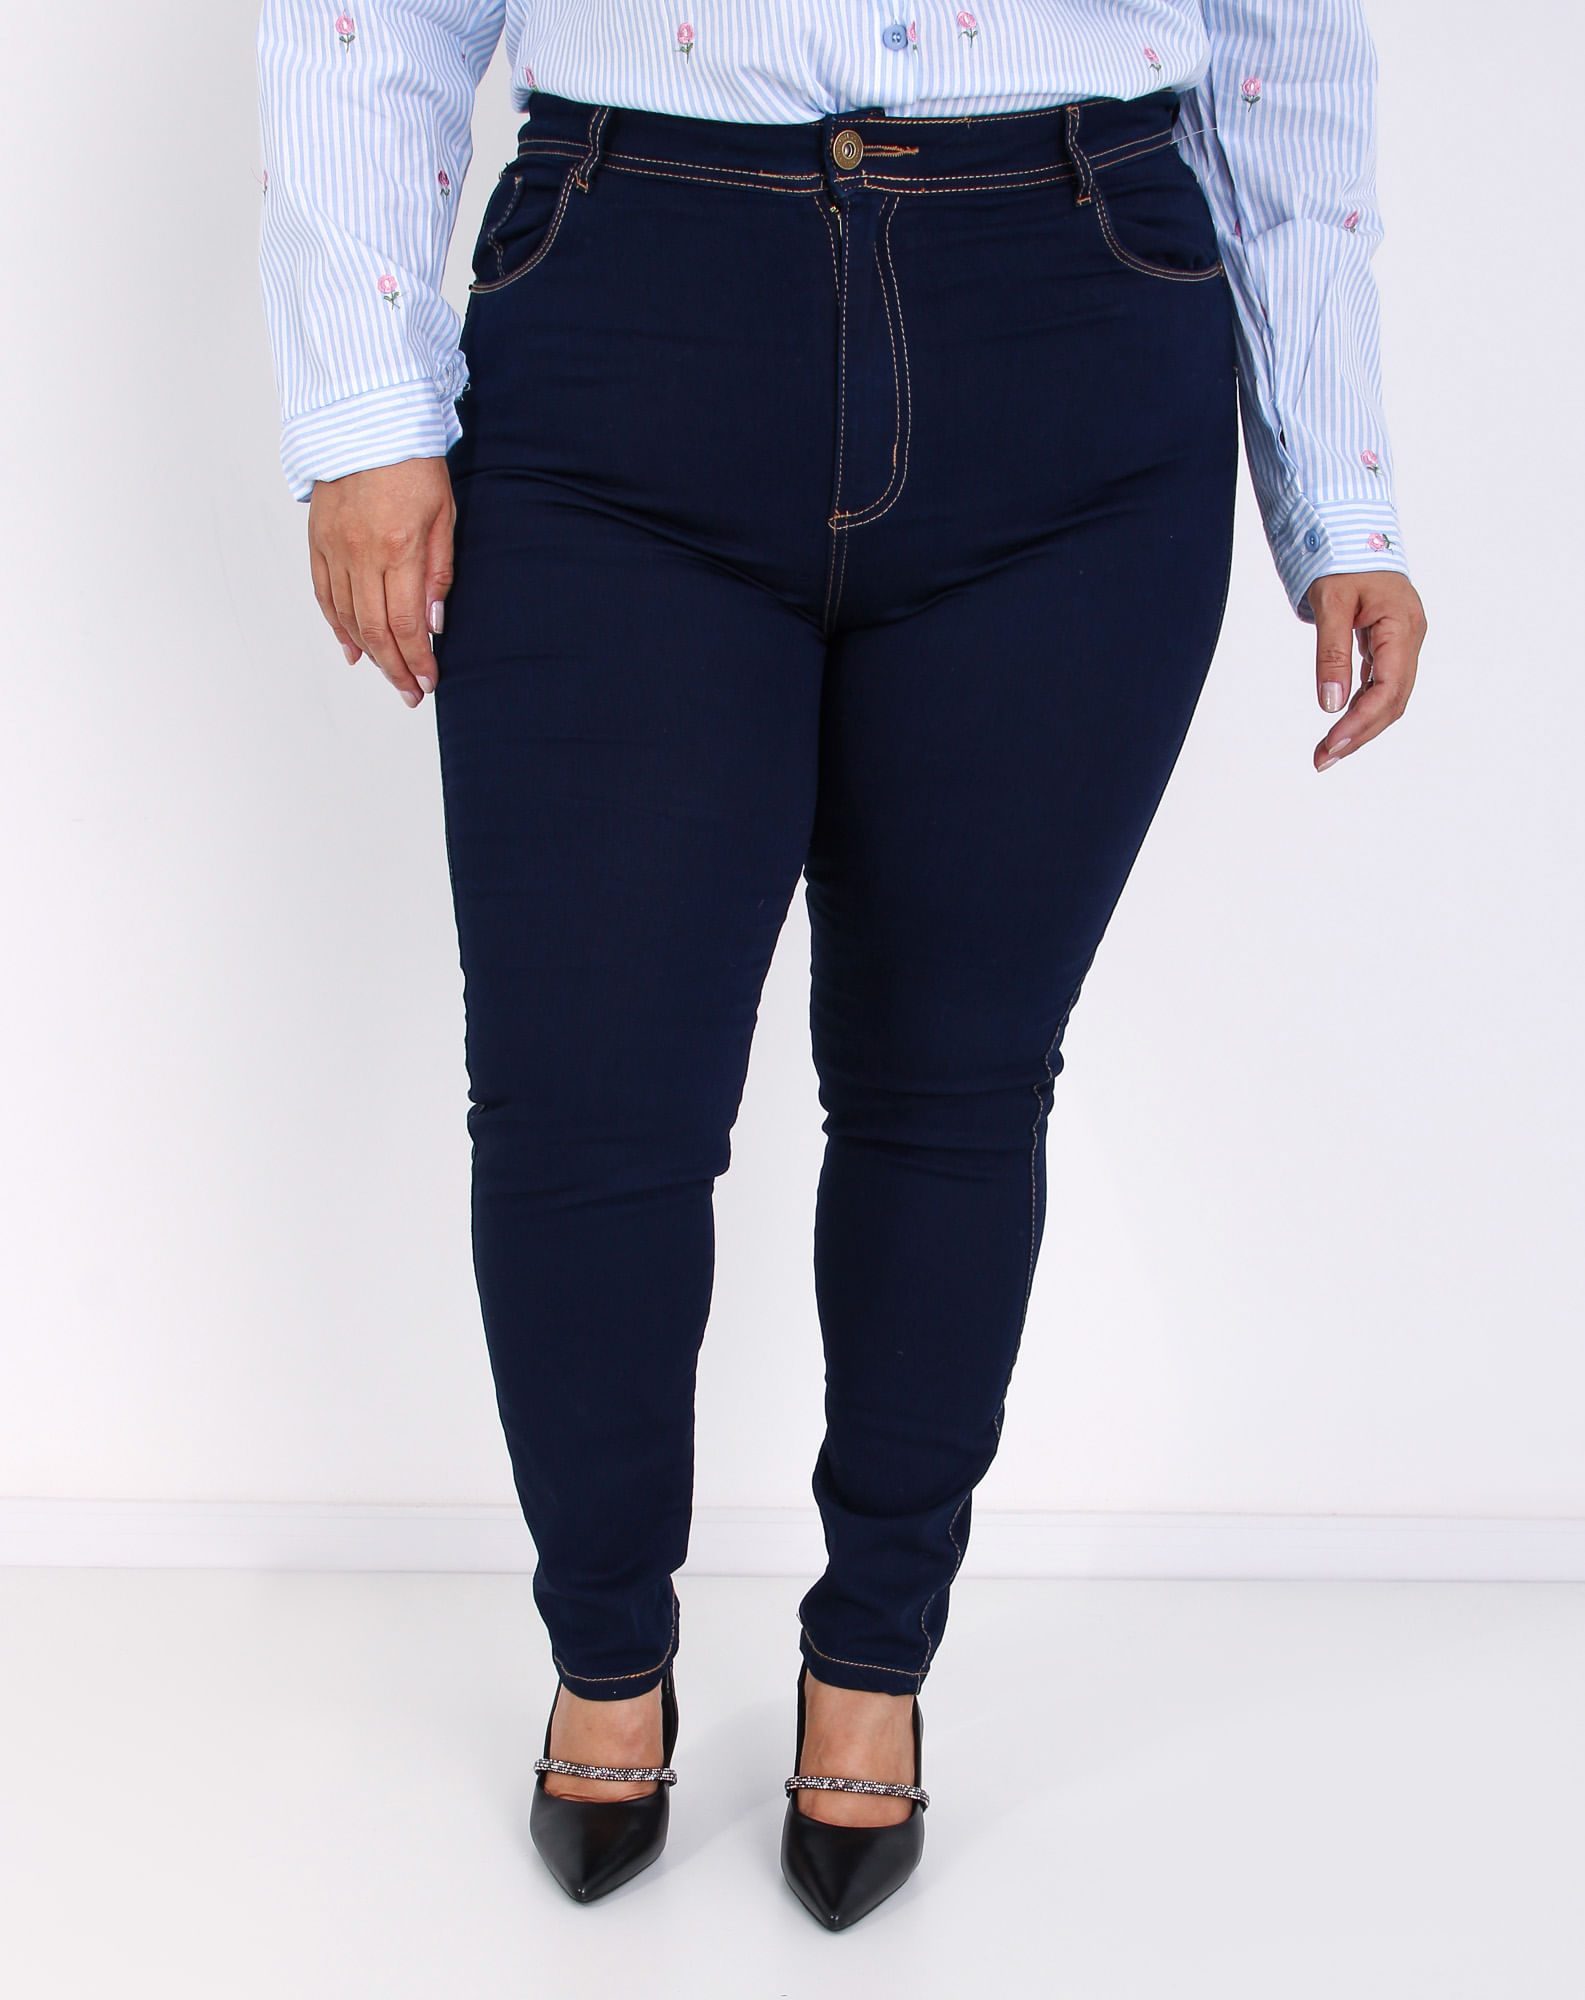 706236001 calça jeans feminina plus size cigarrete jeans amaciado 46 f0e